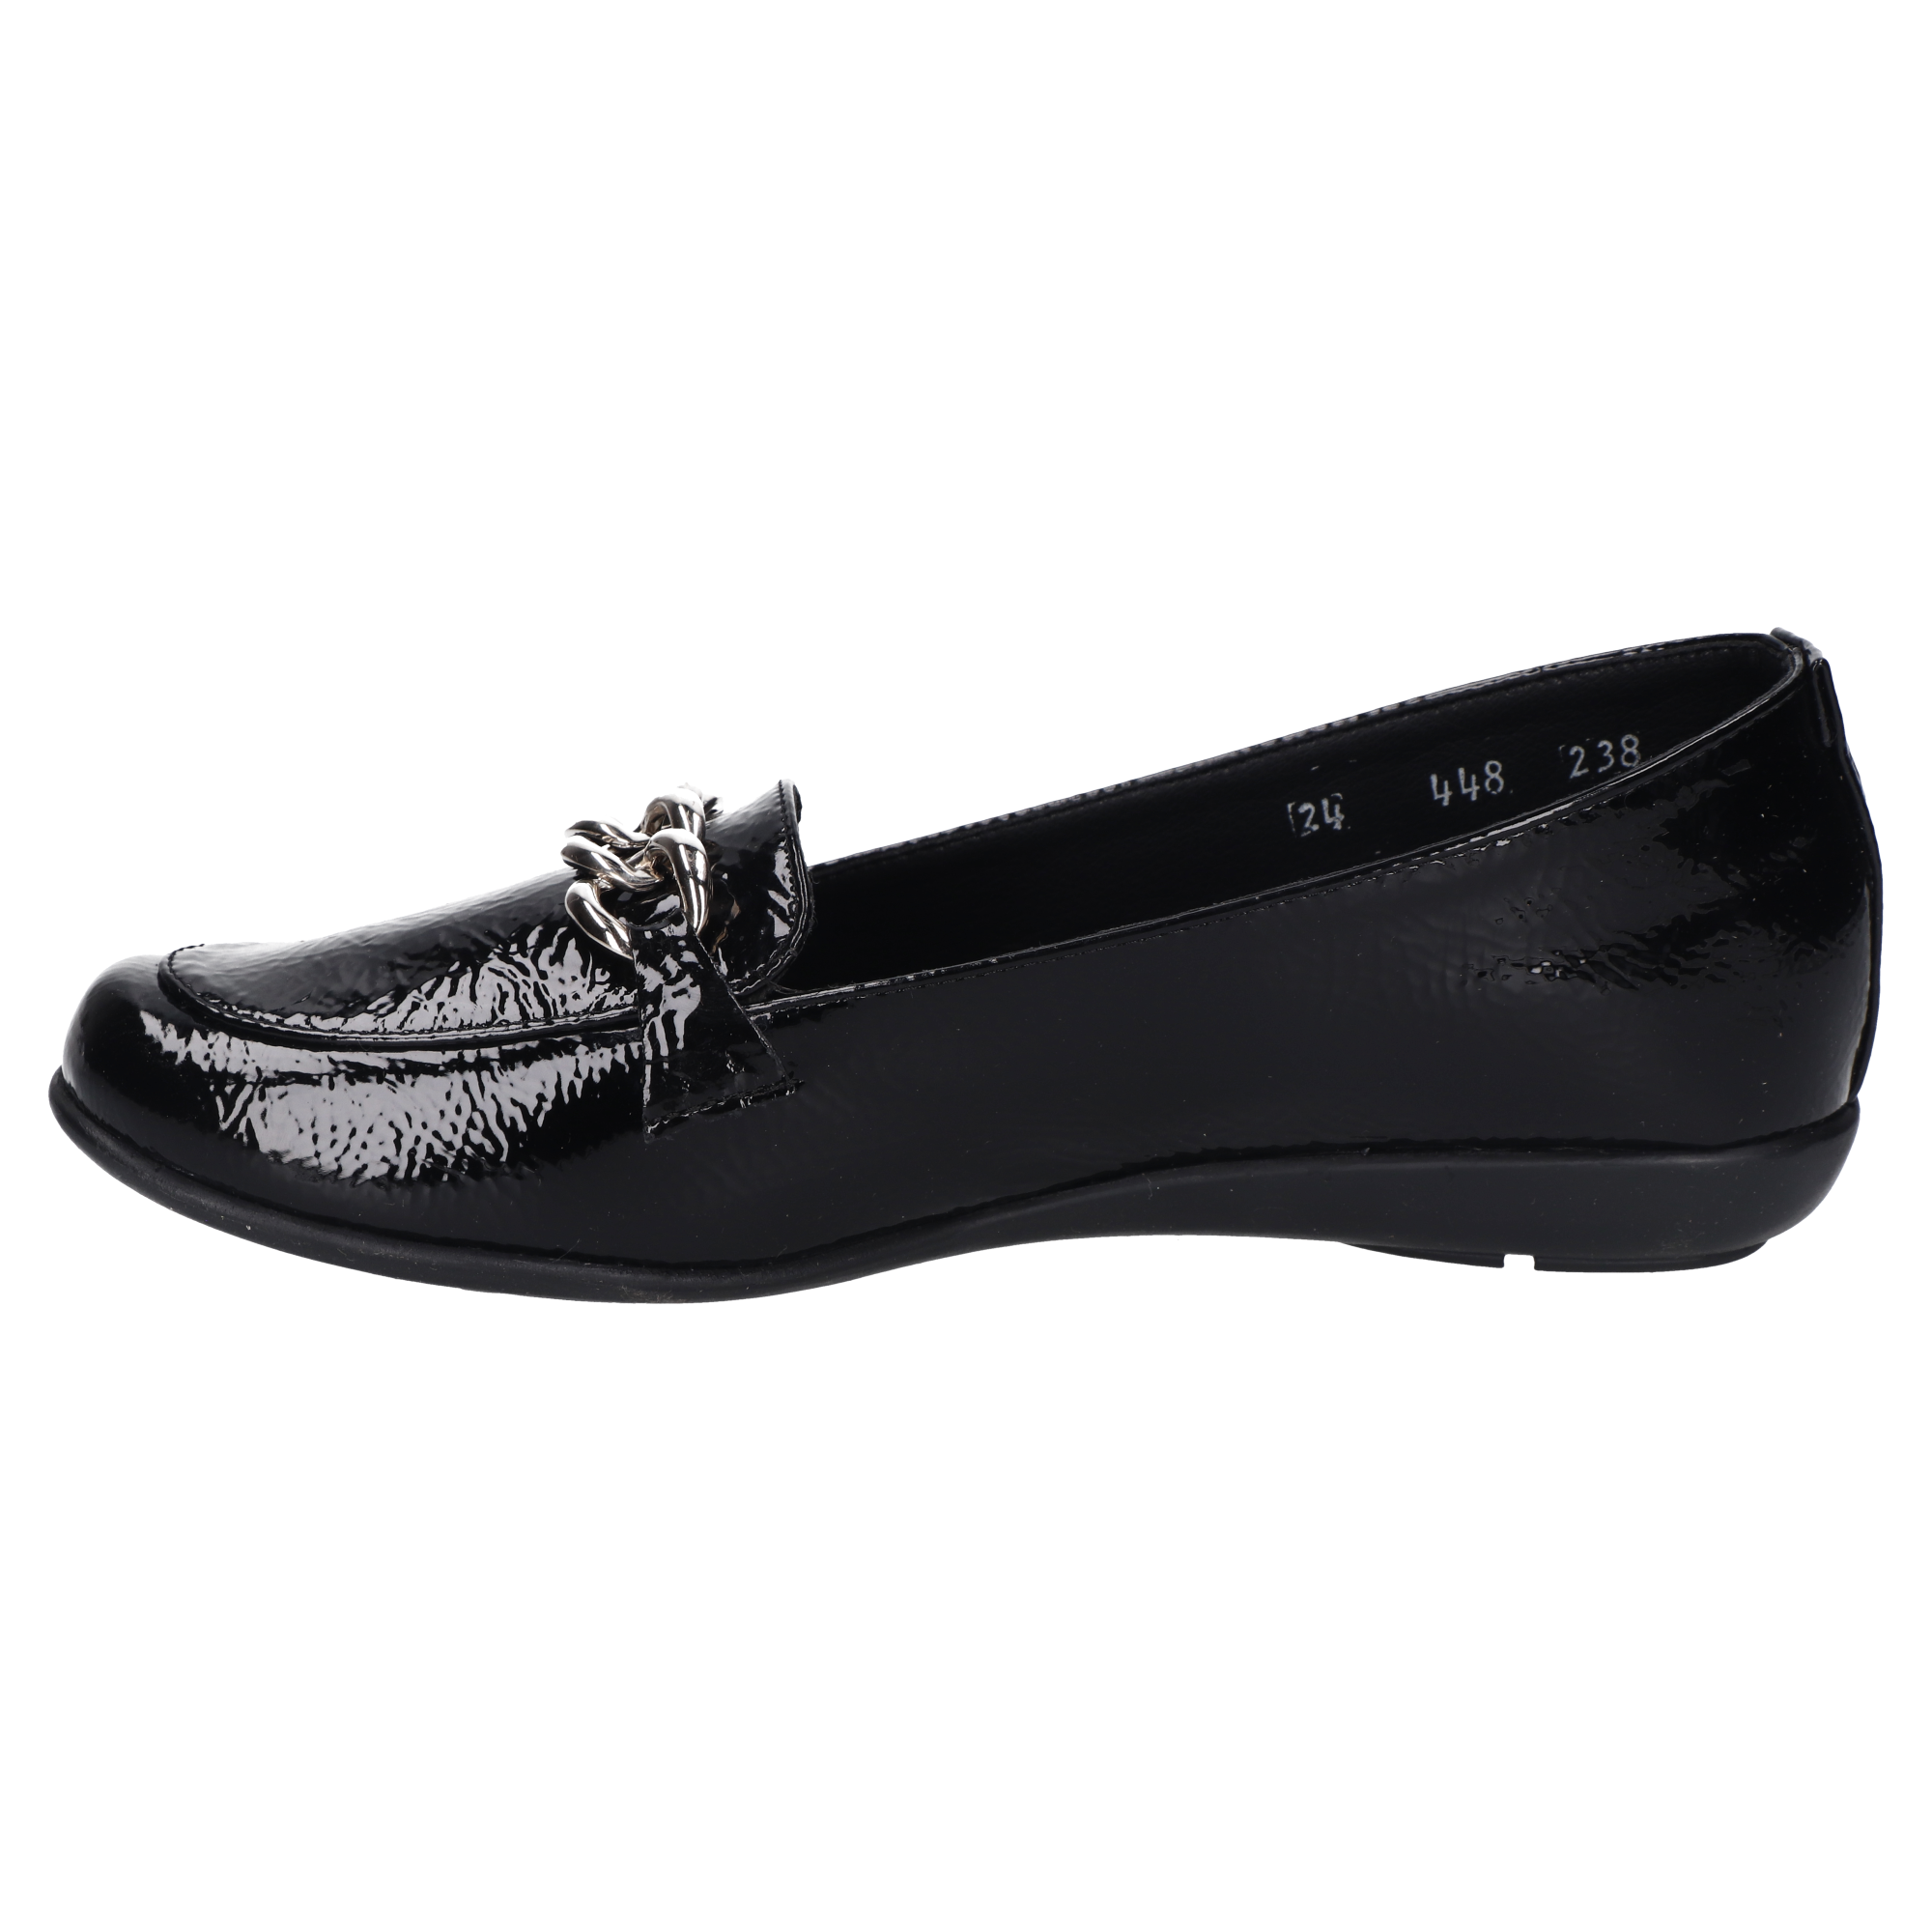 Zapatos Confort Dama Charol Negro 05-448